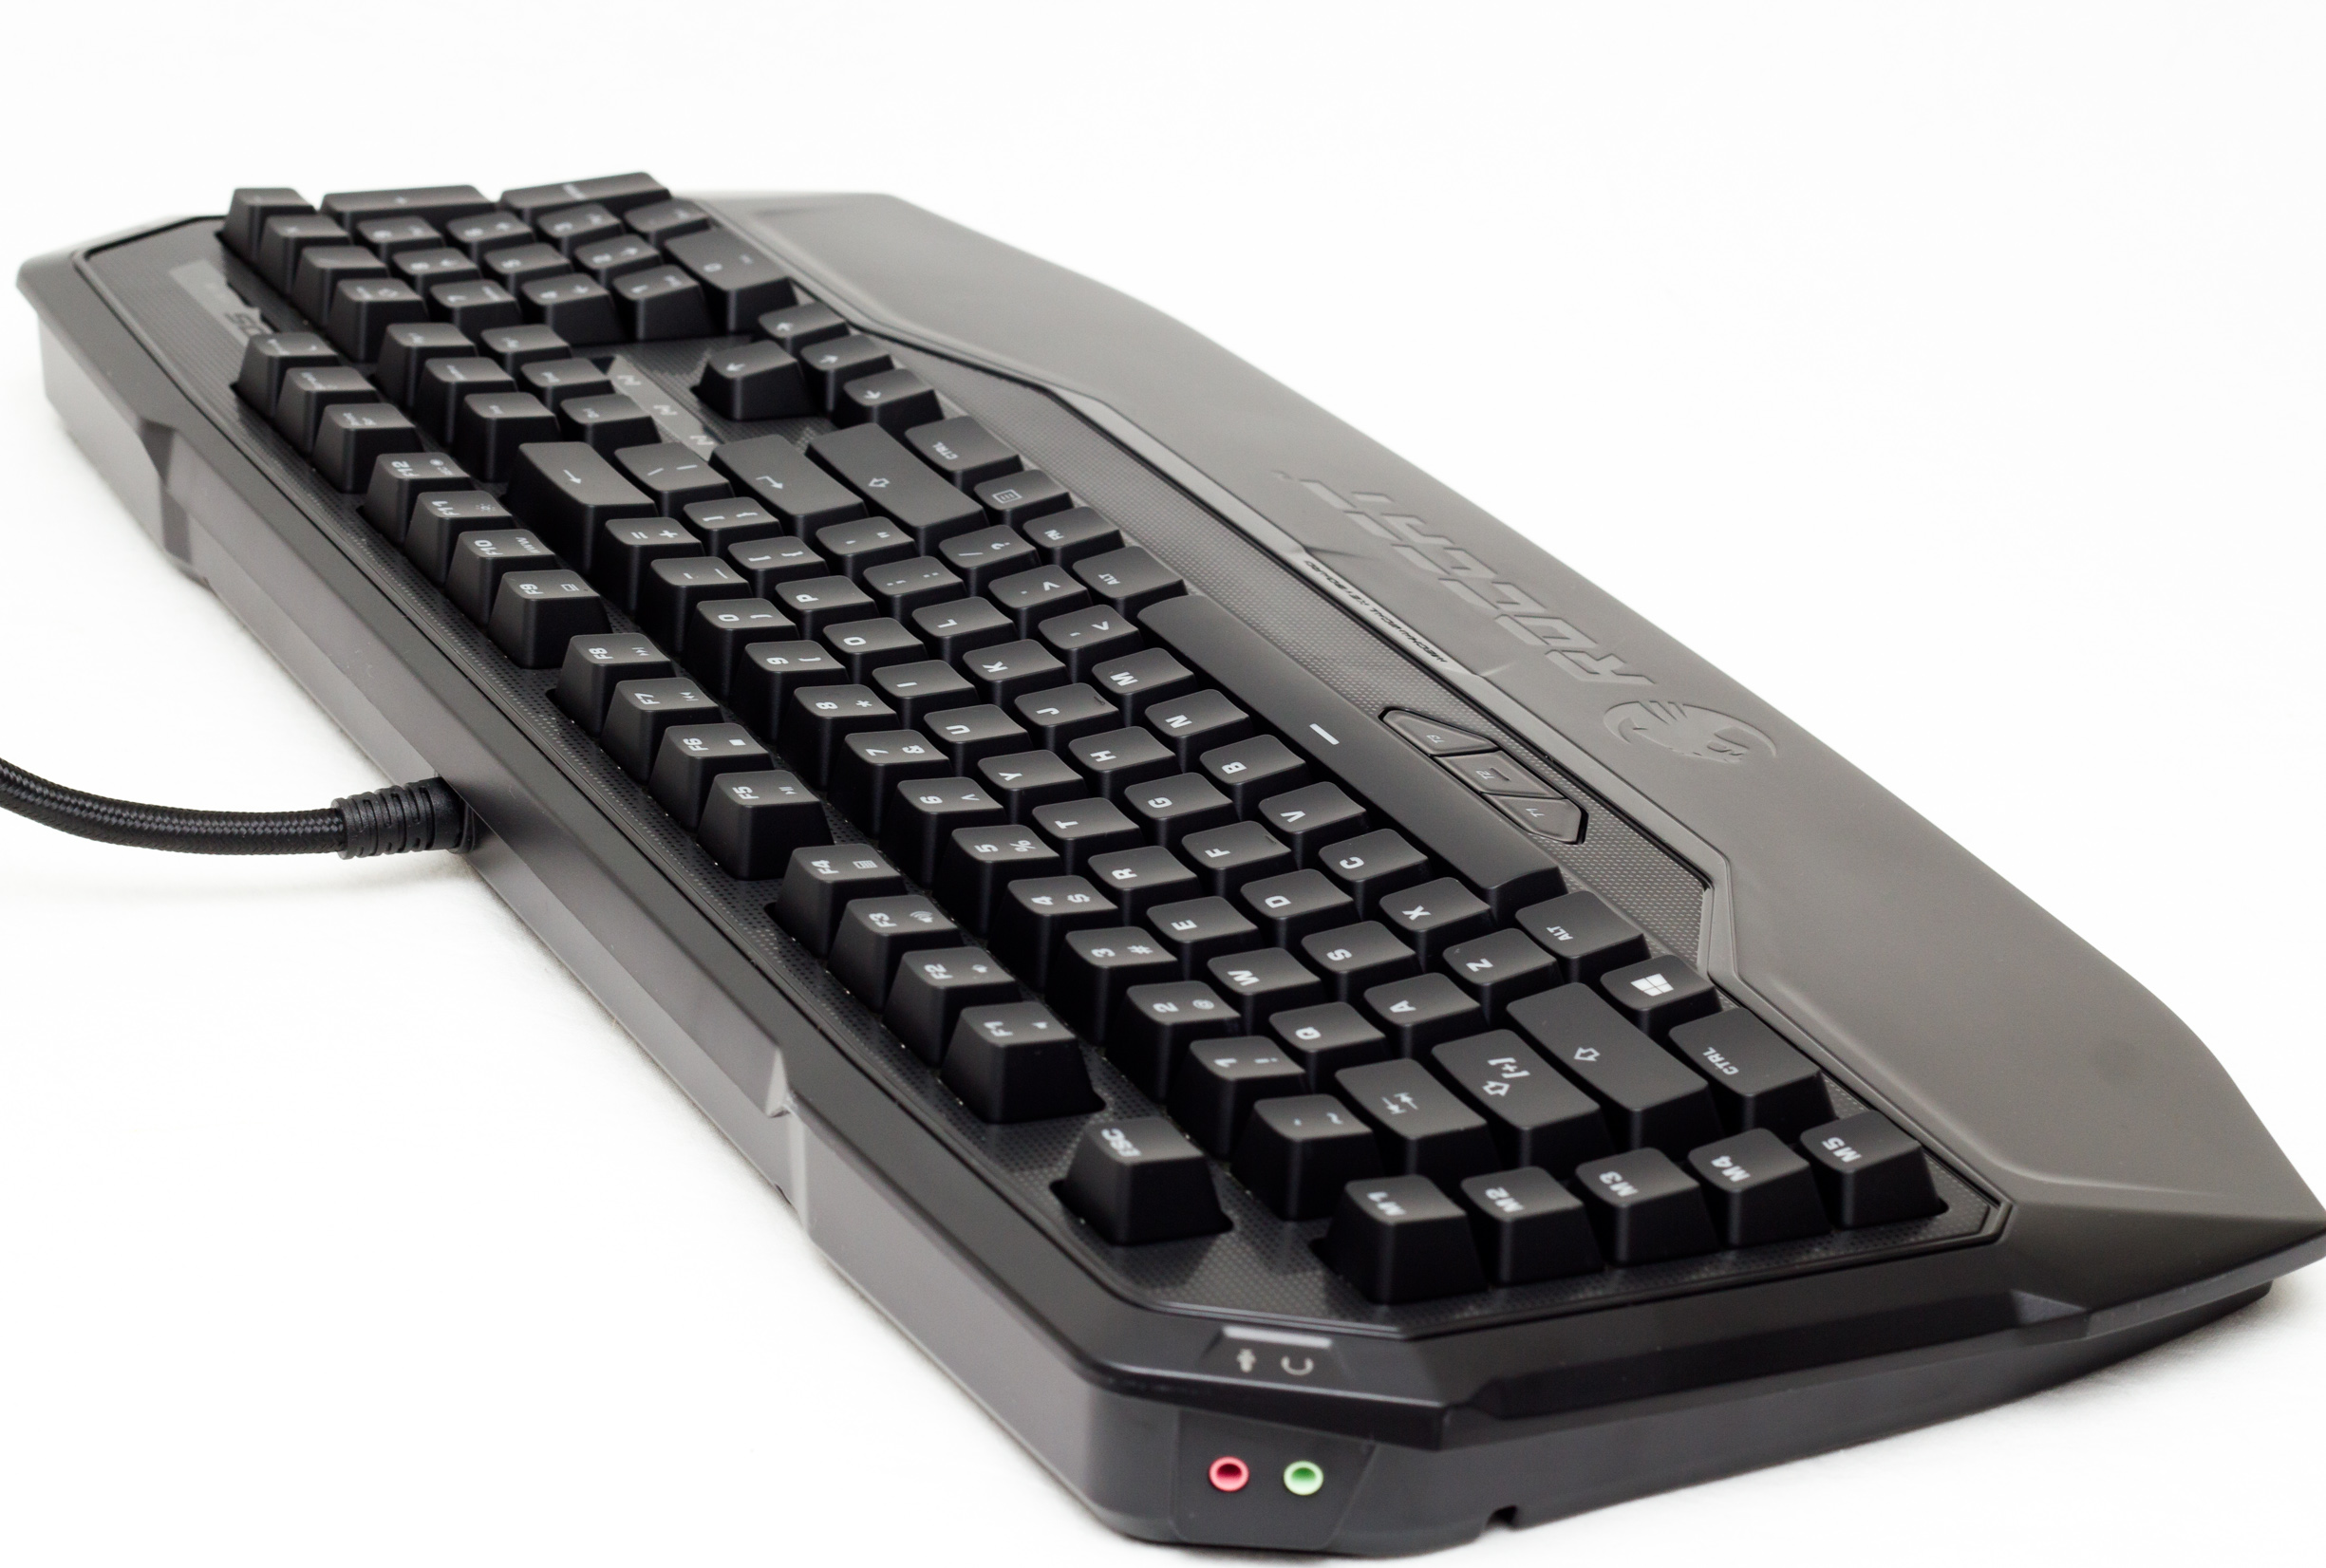 Roccat Ryos MK FX gaming keyboard review PC Gamer